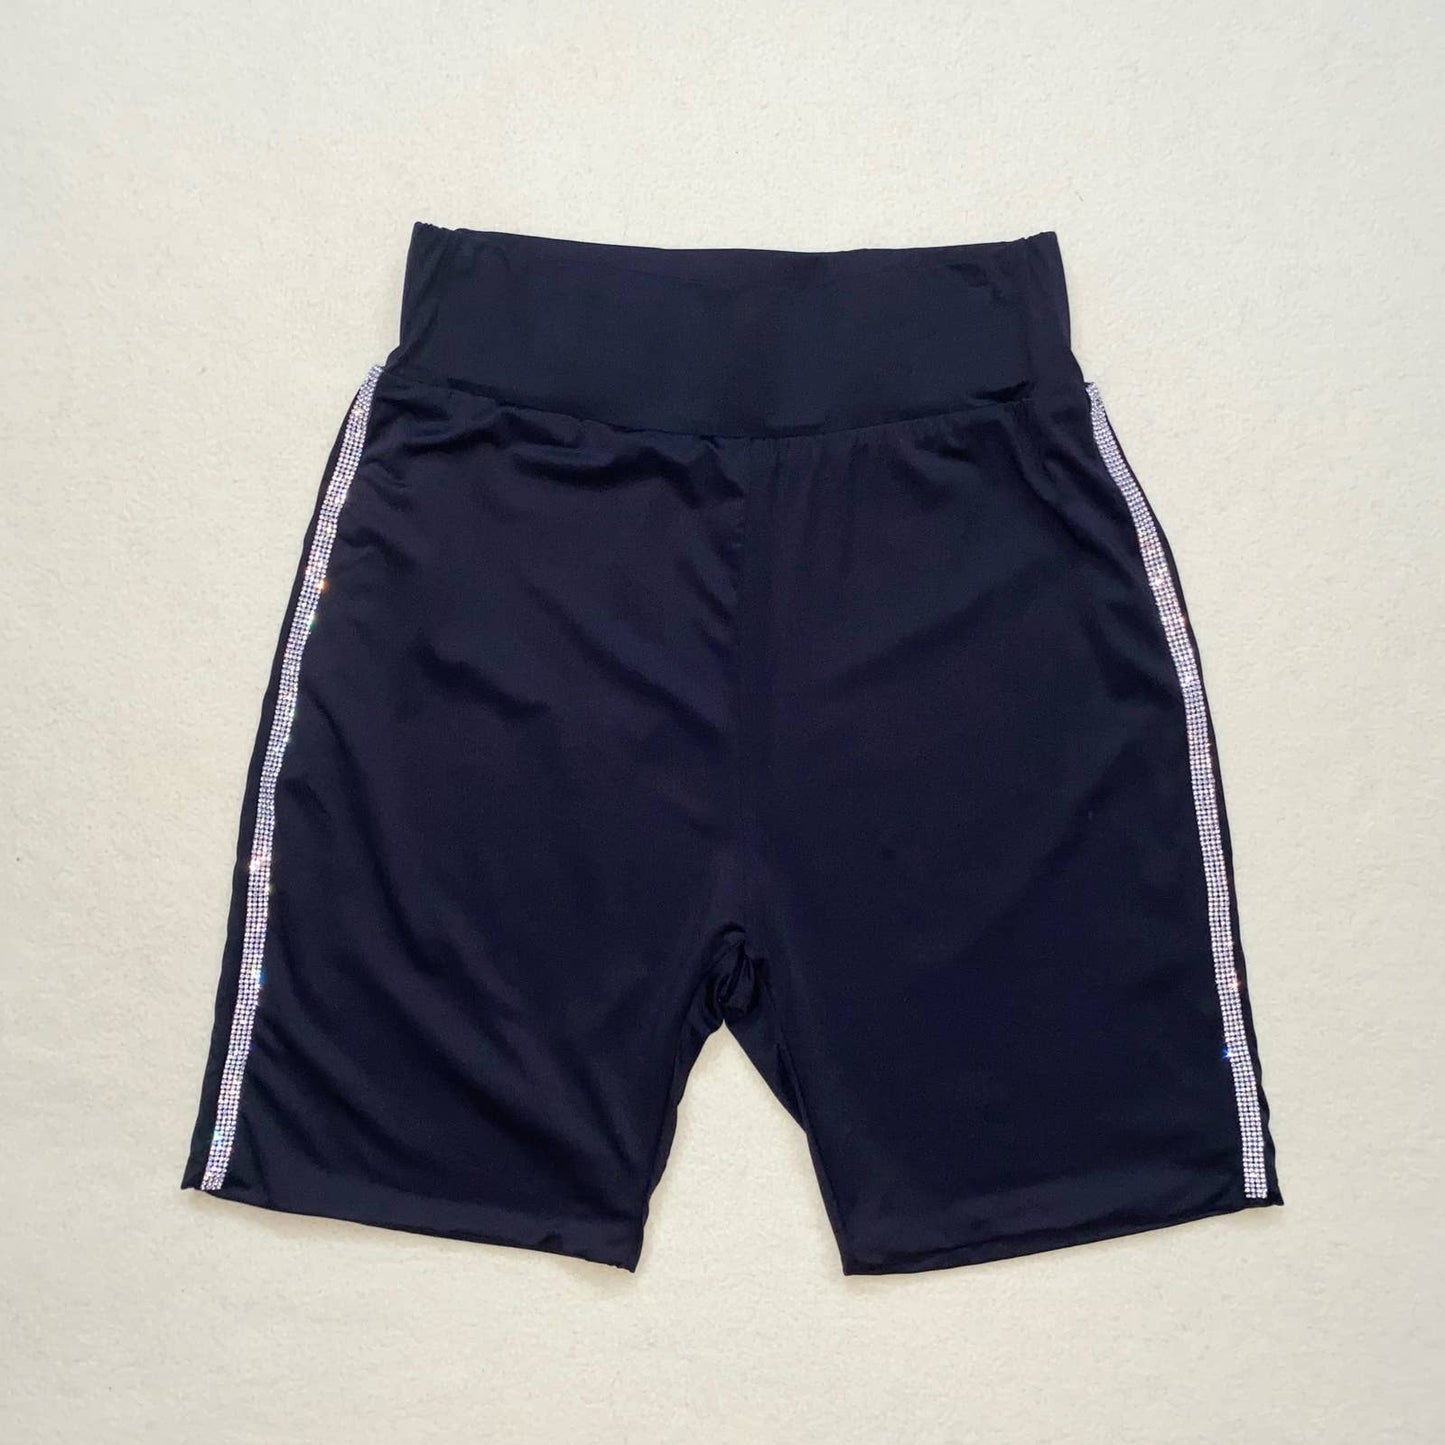 Preowned Meshki Rhinestone Stripe Biker Shorts, Size Medium